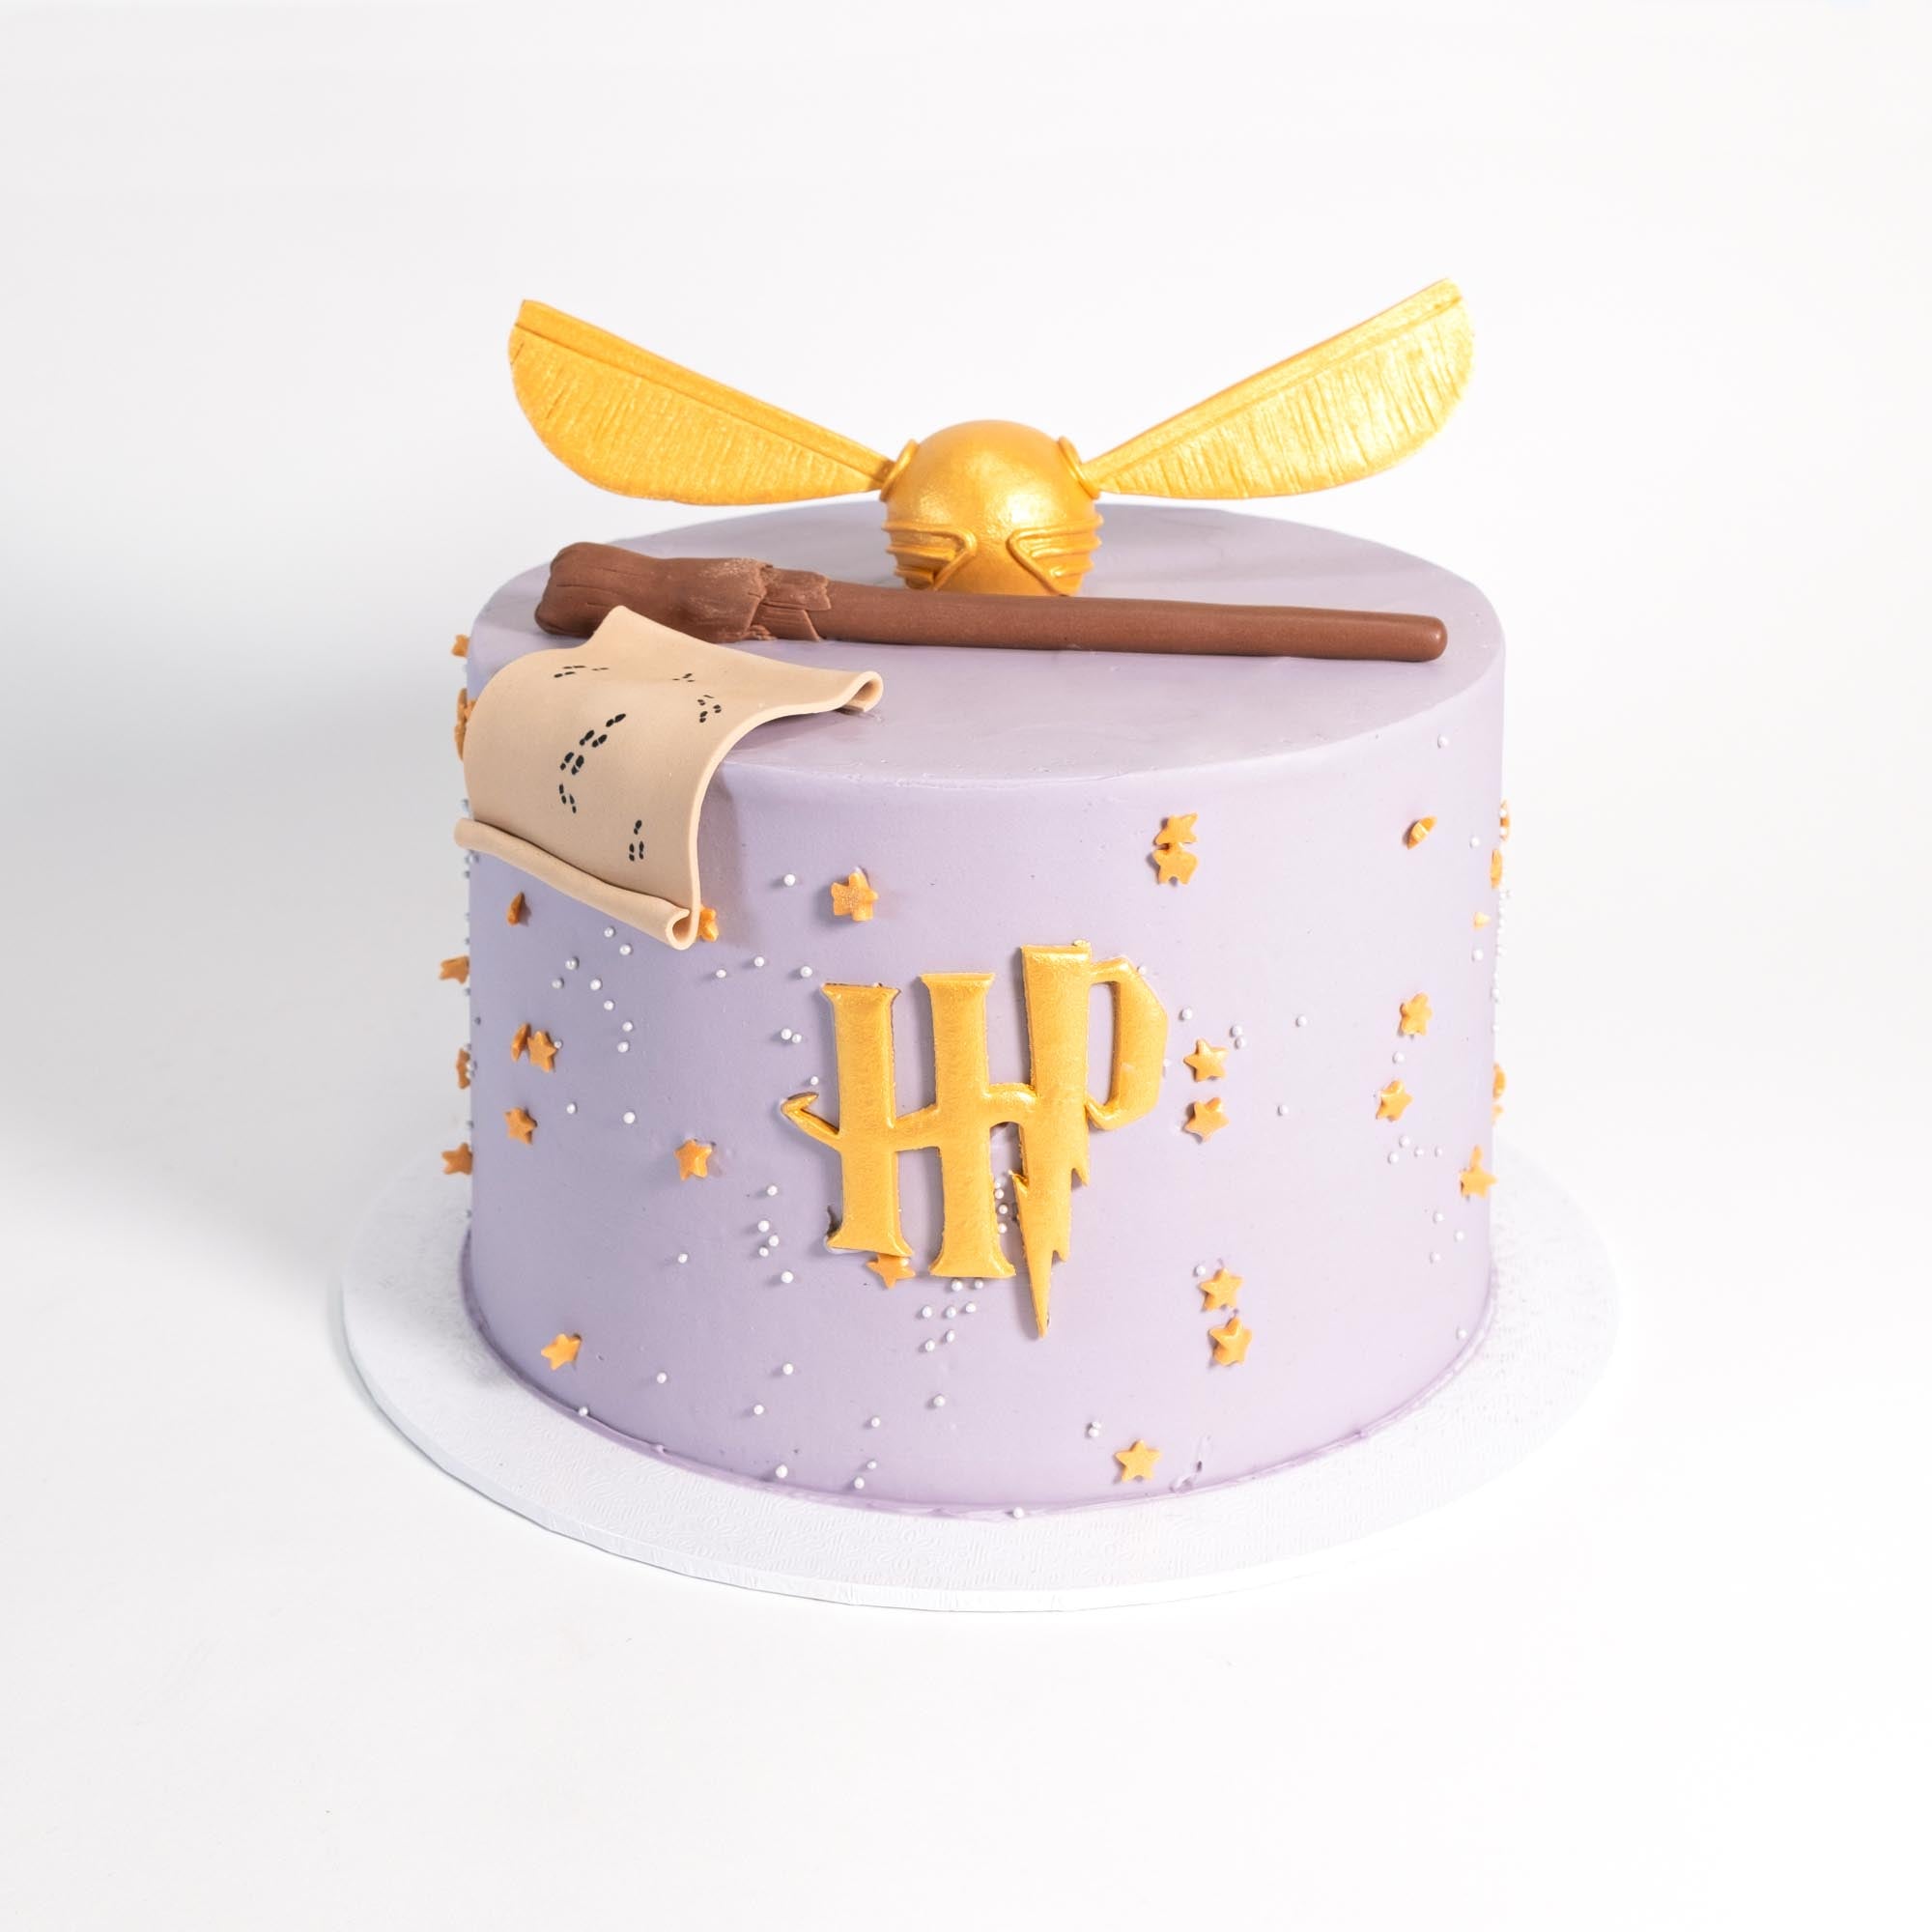 Harry Potter Theme Cake - The Cake Mixer | The Cake Mixer